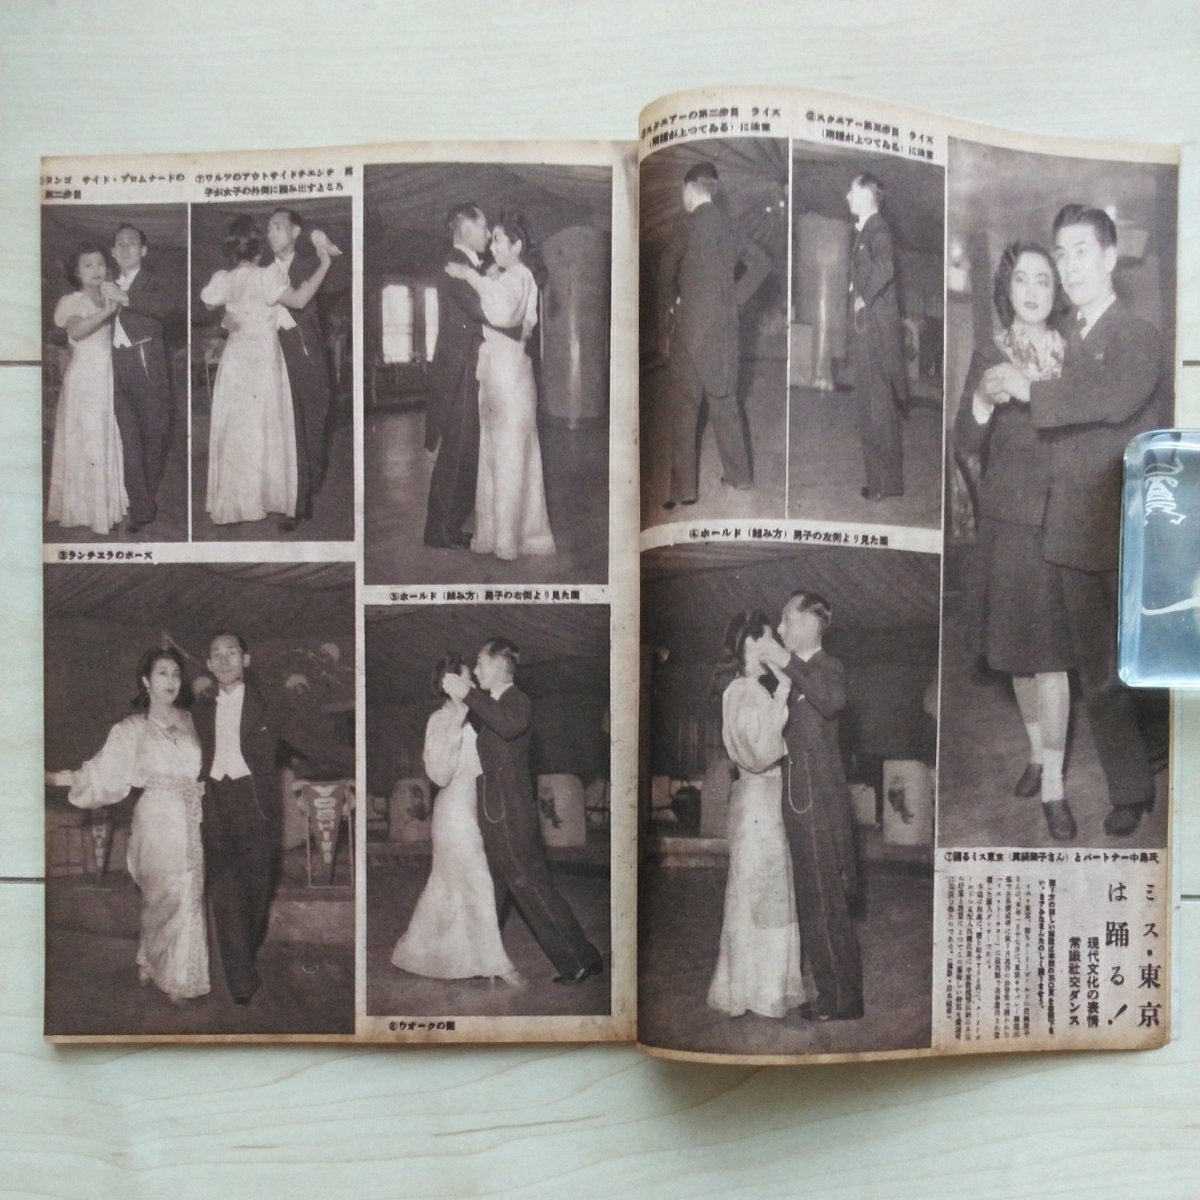 # magazine [ beautiful .] Showa era 22 year 4 month .. cover .*... modern times woman company ..# company .dance. .. person / other.